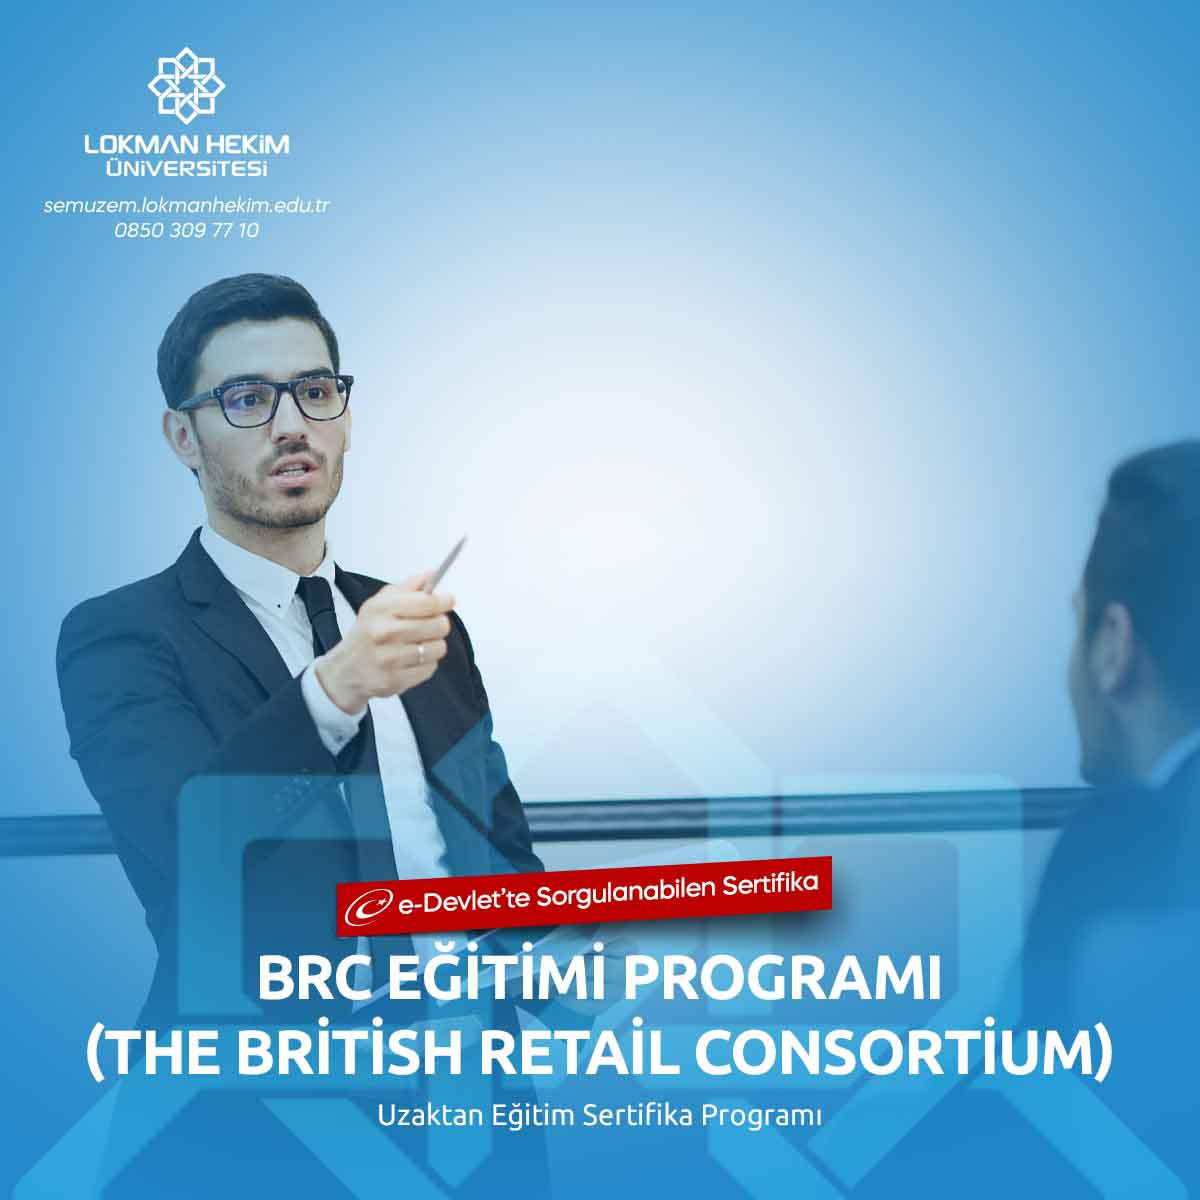 BRC Eğitimi (The British Retail Consortium) Programı